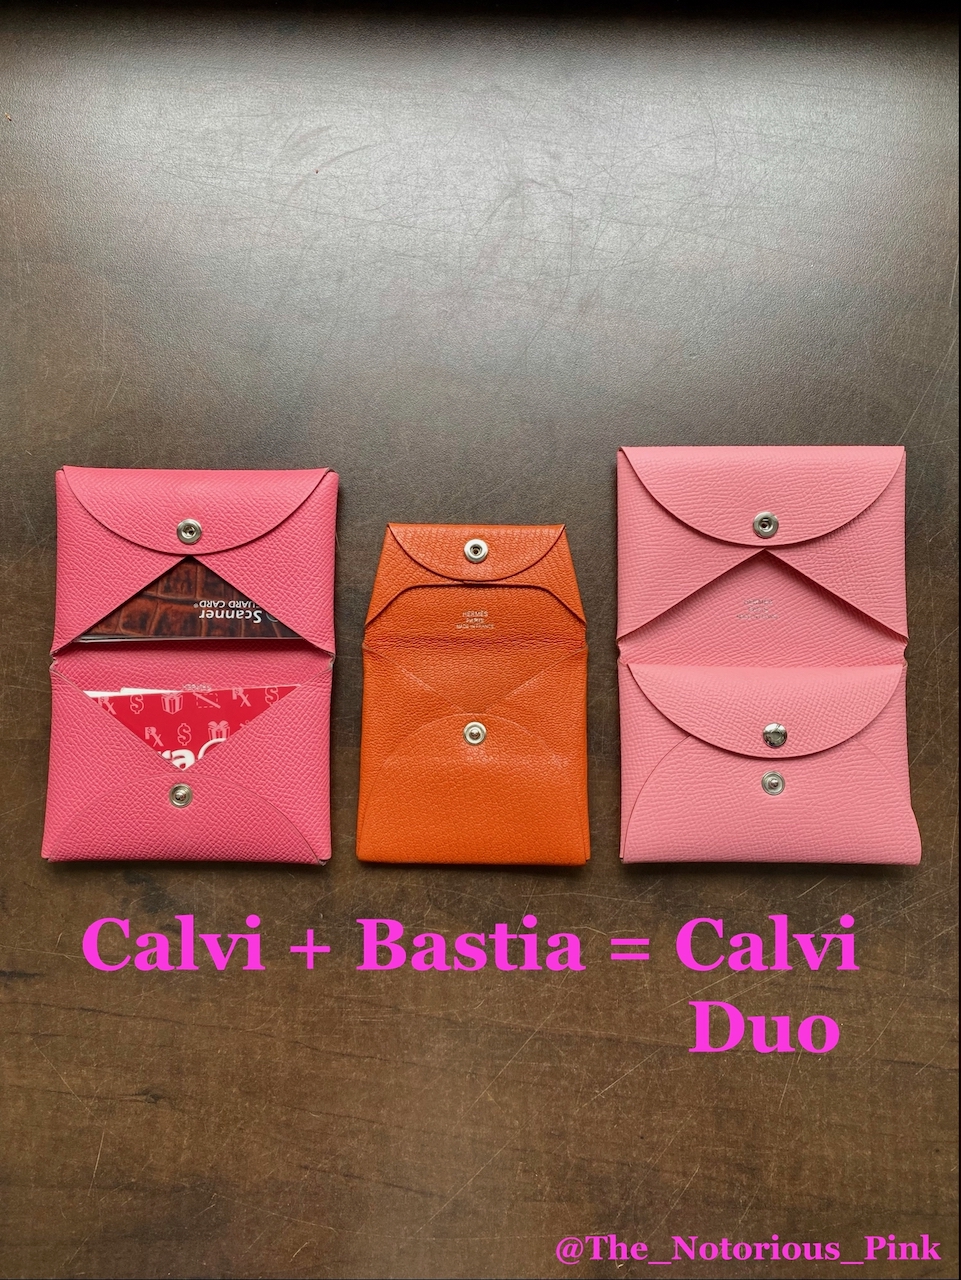 Calvi Duo Compact card holder